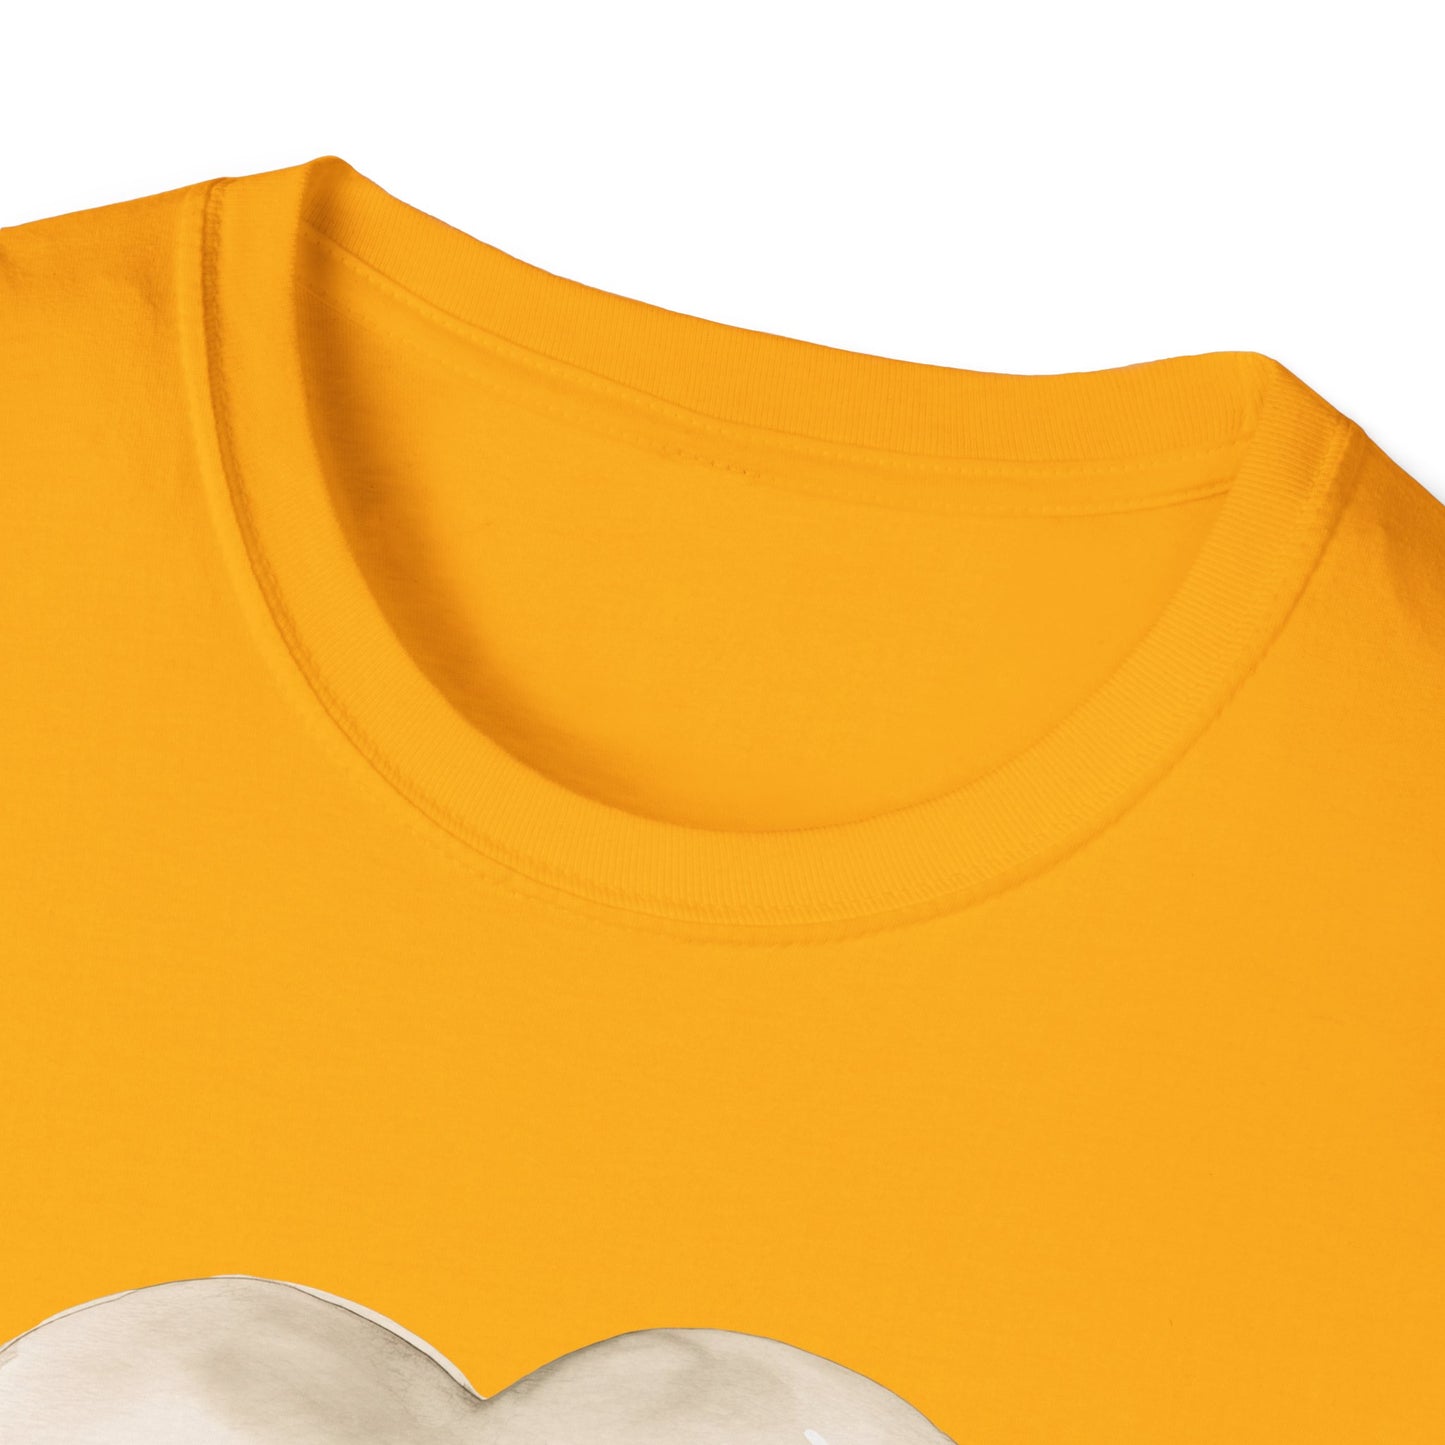 Feel-Joy Unisex Softstyle T-Shirt, Men and Women T-shirt (I Hear The Sound Of Joy)